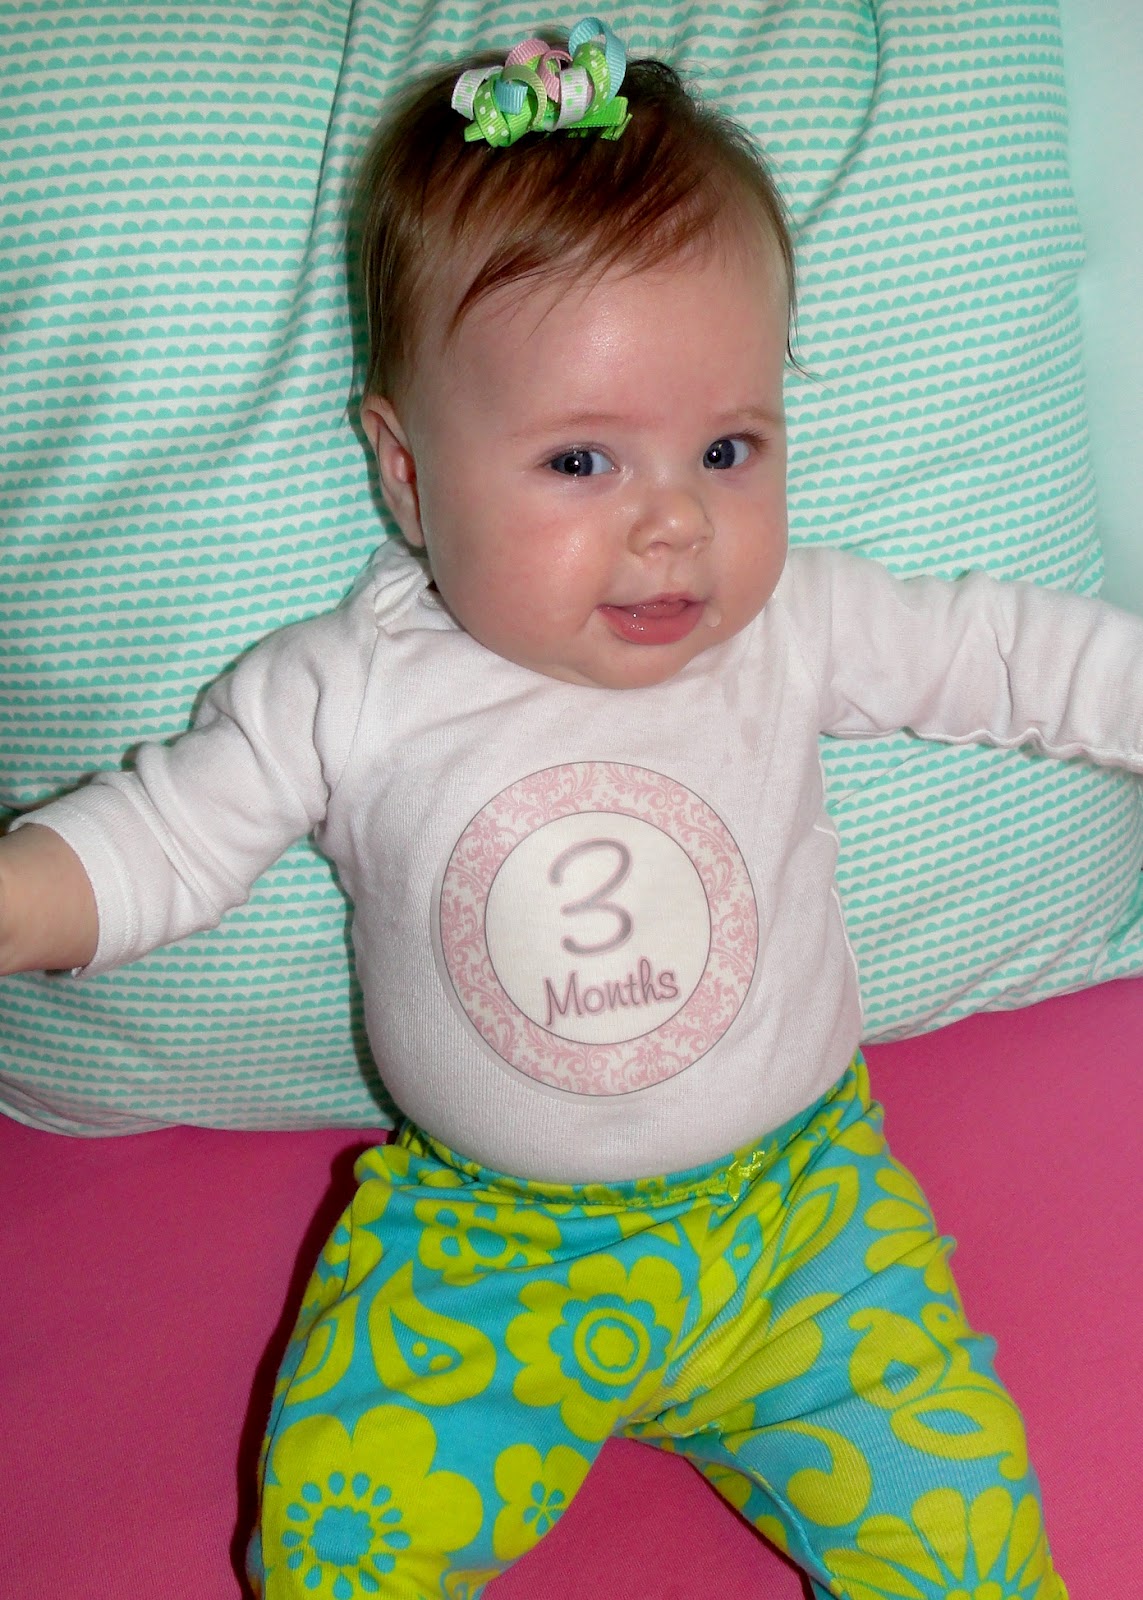 Britt ~ Three Months Old! - The Journey of Parenthood...